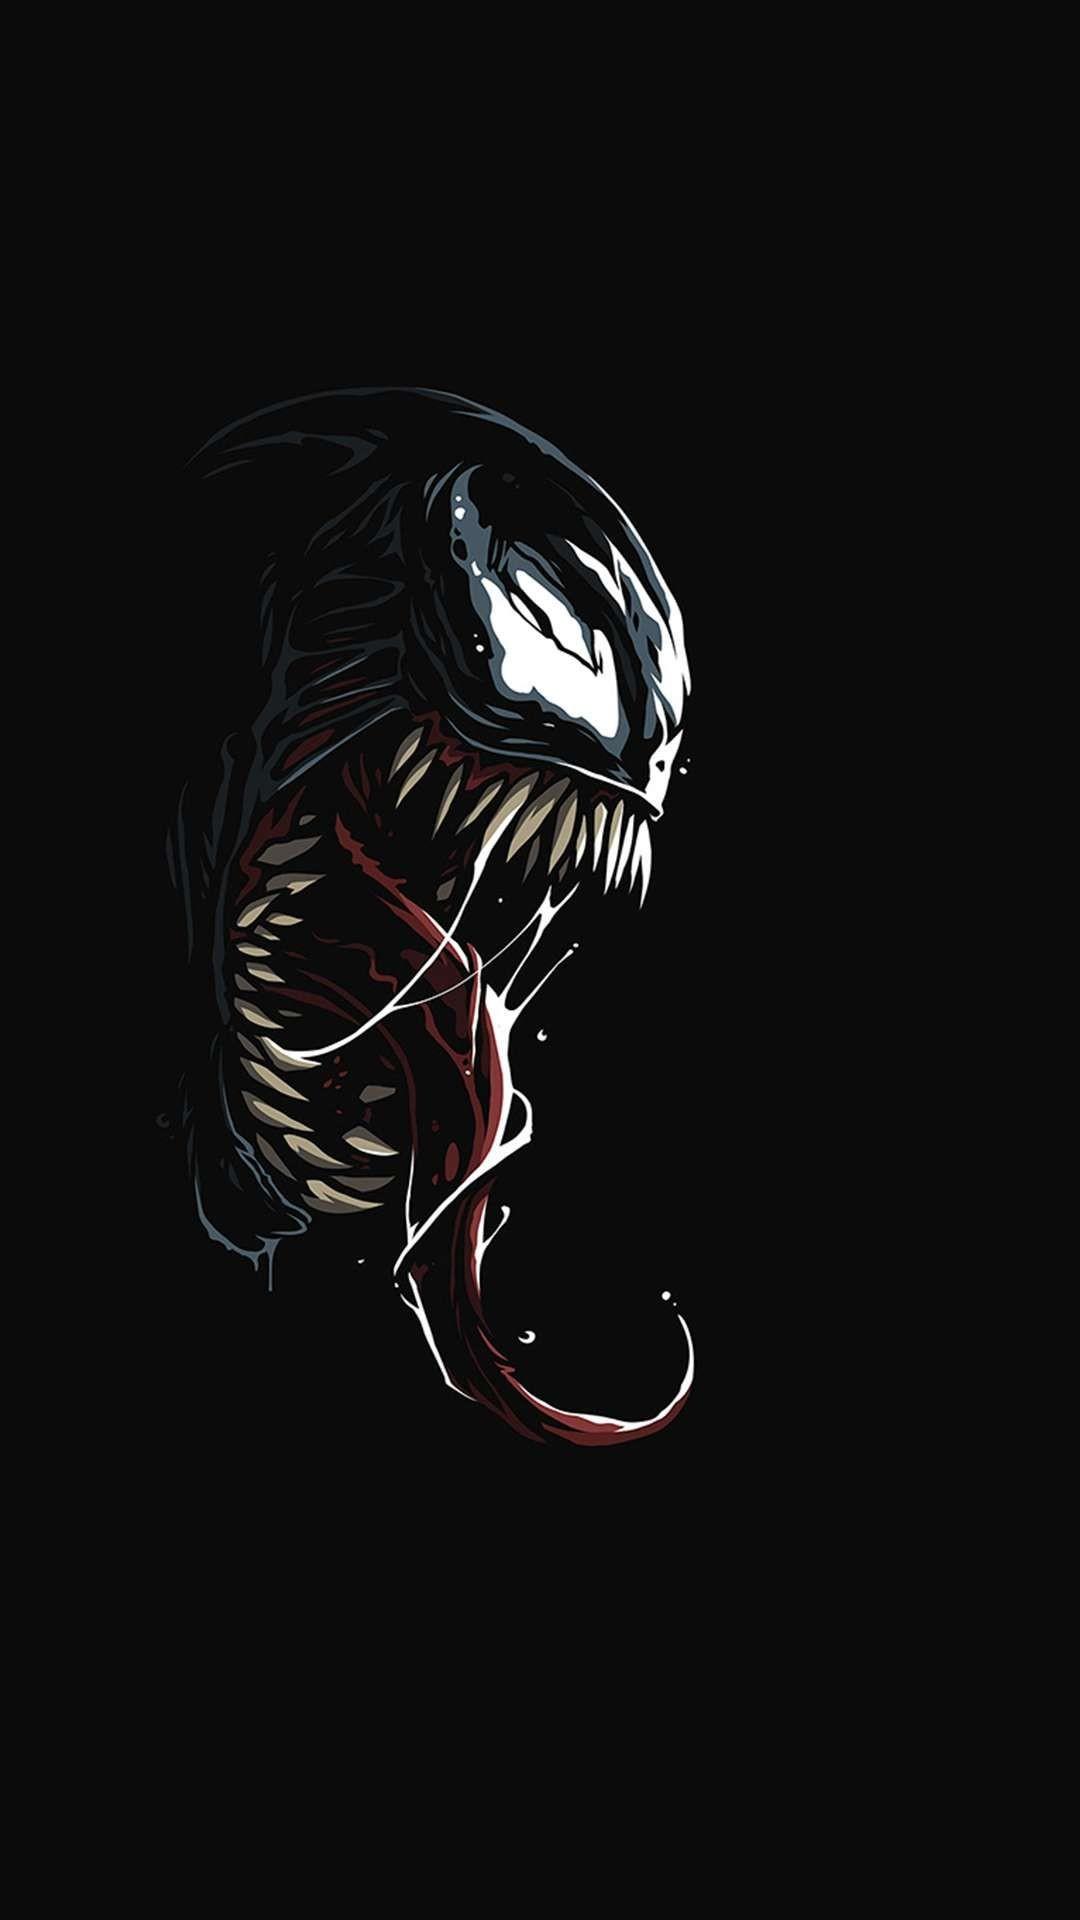 Venom iPhone Wallpaper Download For Free  myphonewalls